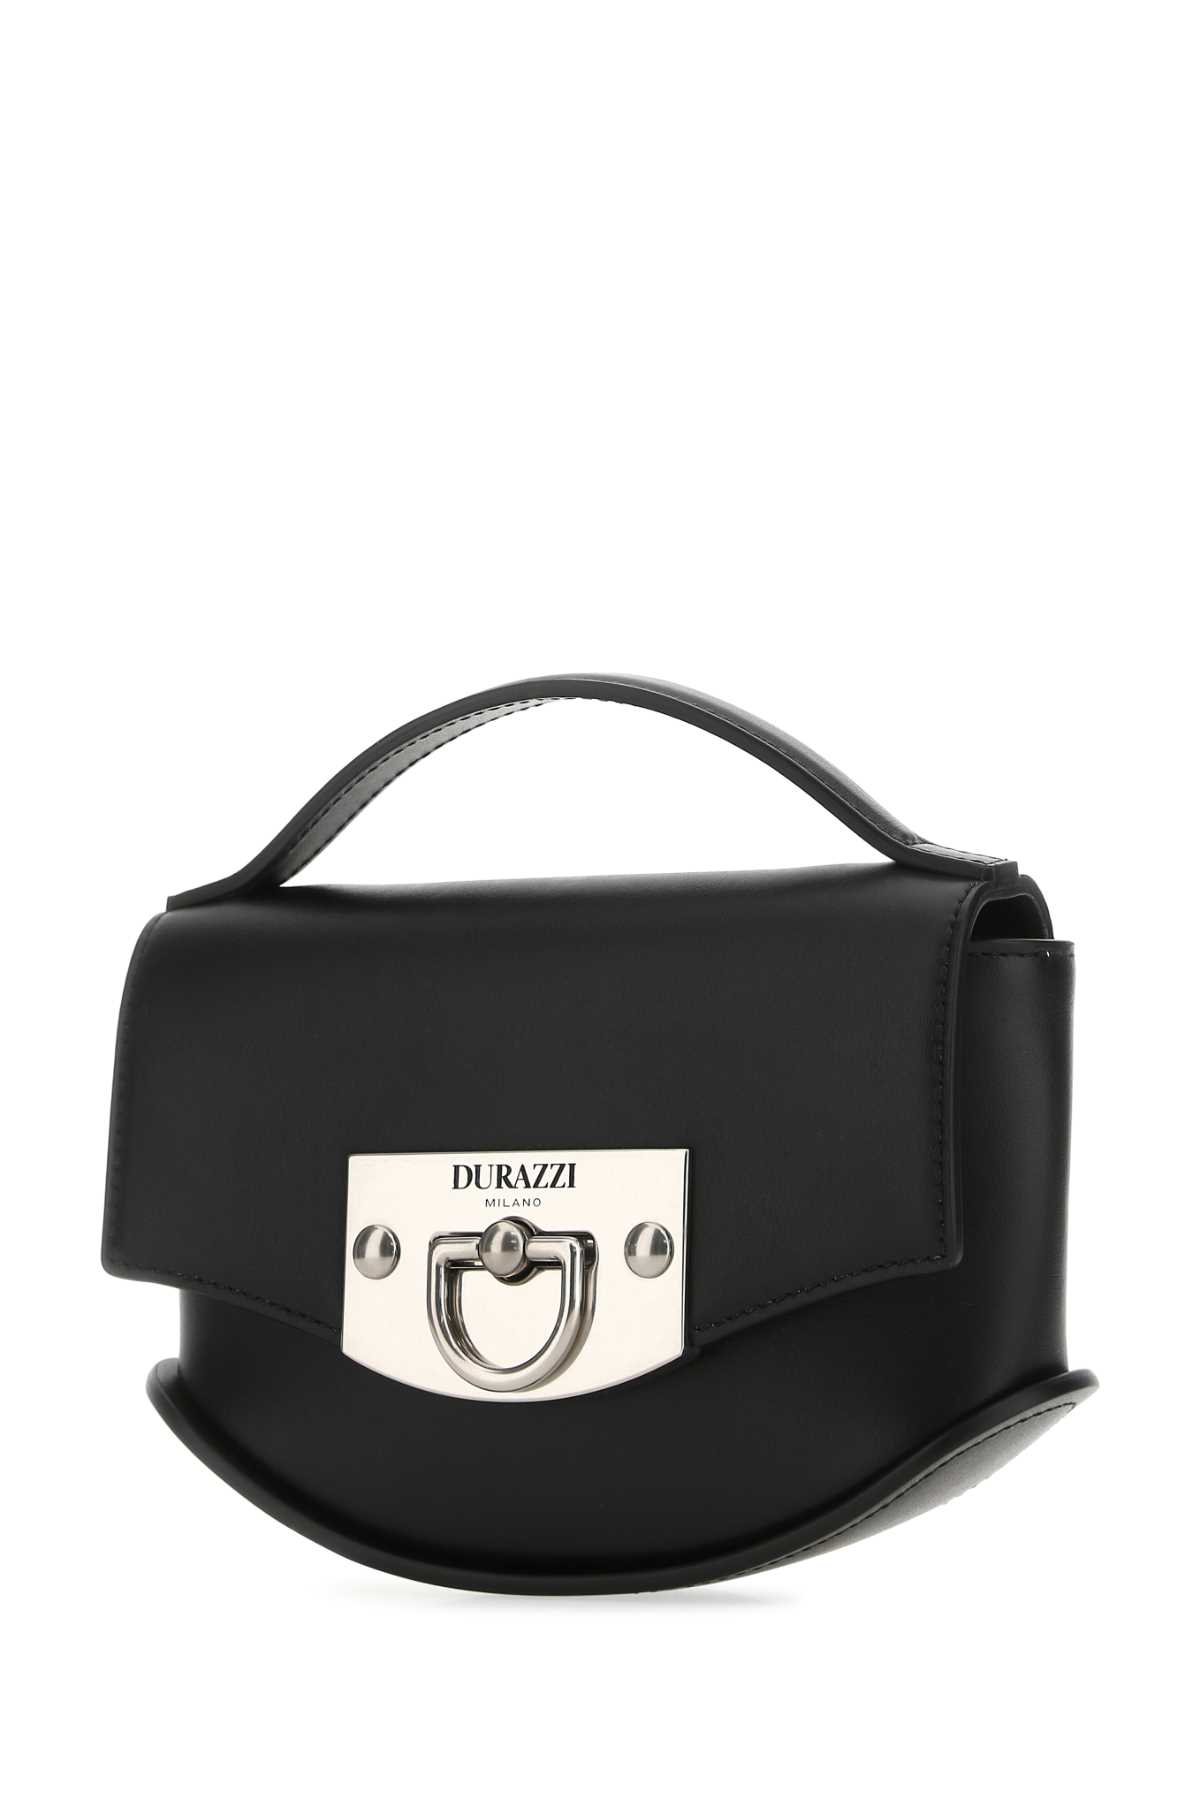 Shop Durazzi Milano Black Leather Mini Swing Handbag